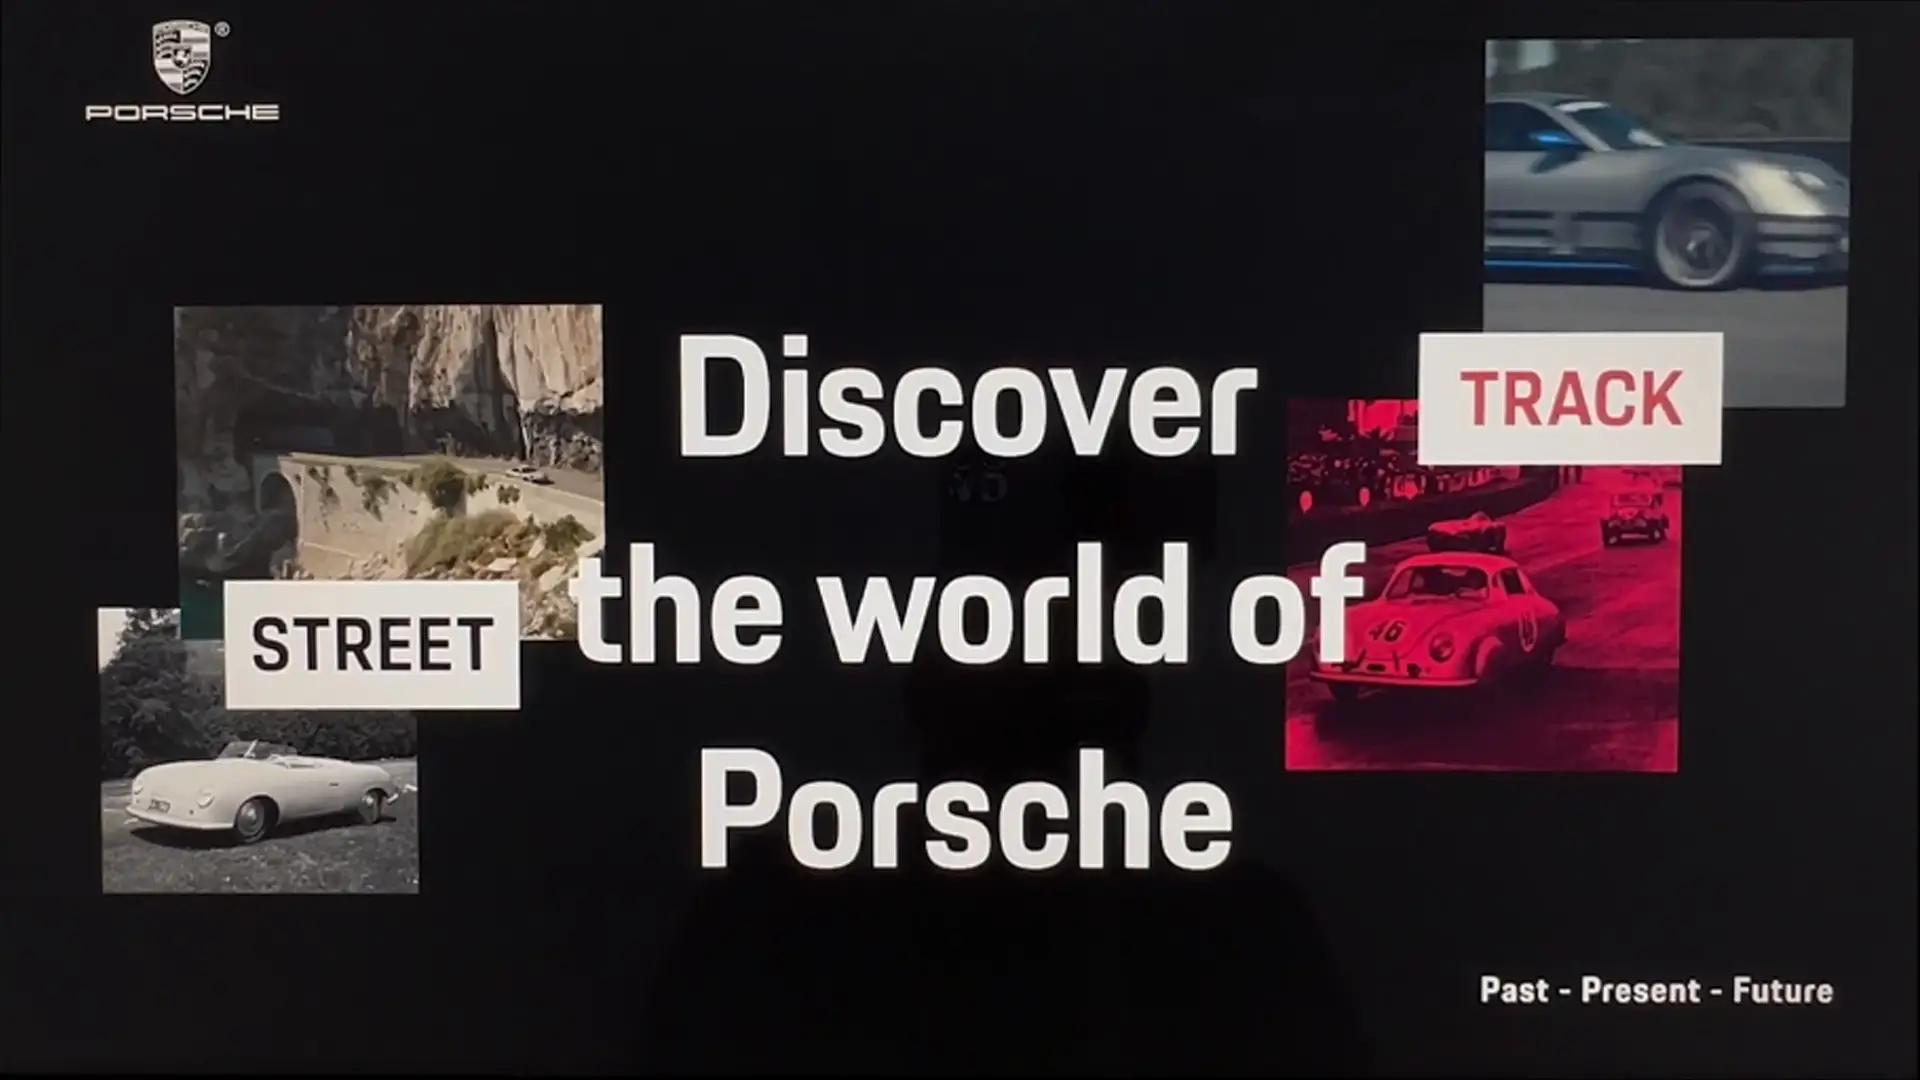 Porsche multitouch touchscreen application